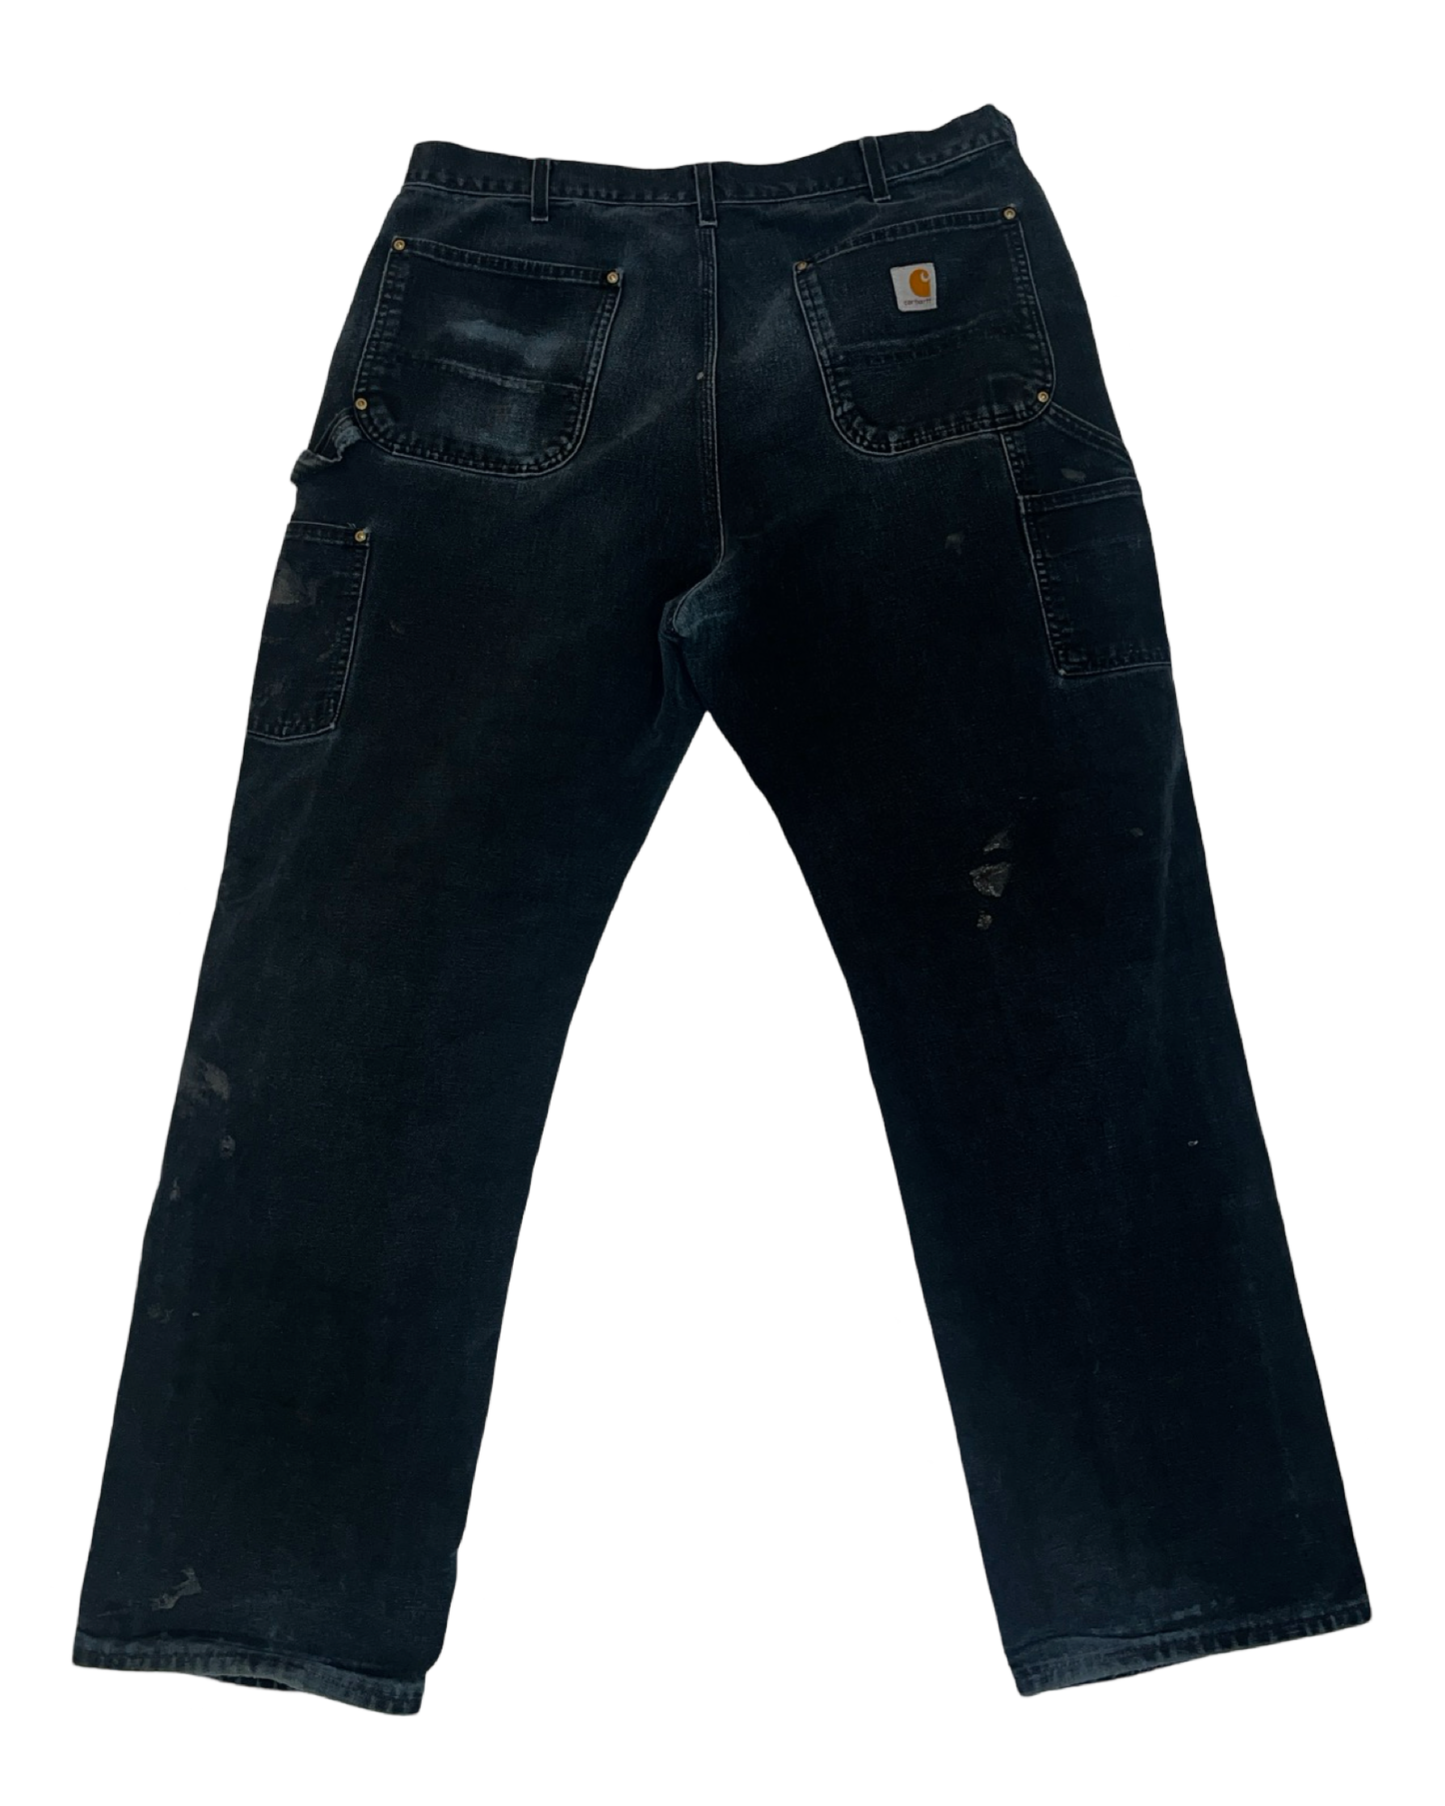 36 x 32 Vintage 90s Carhartt Black Double Knee Pants